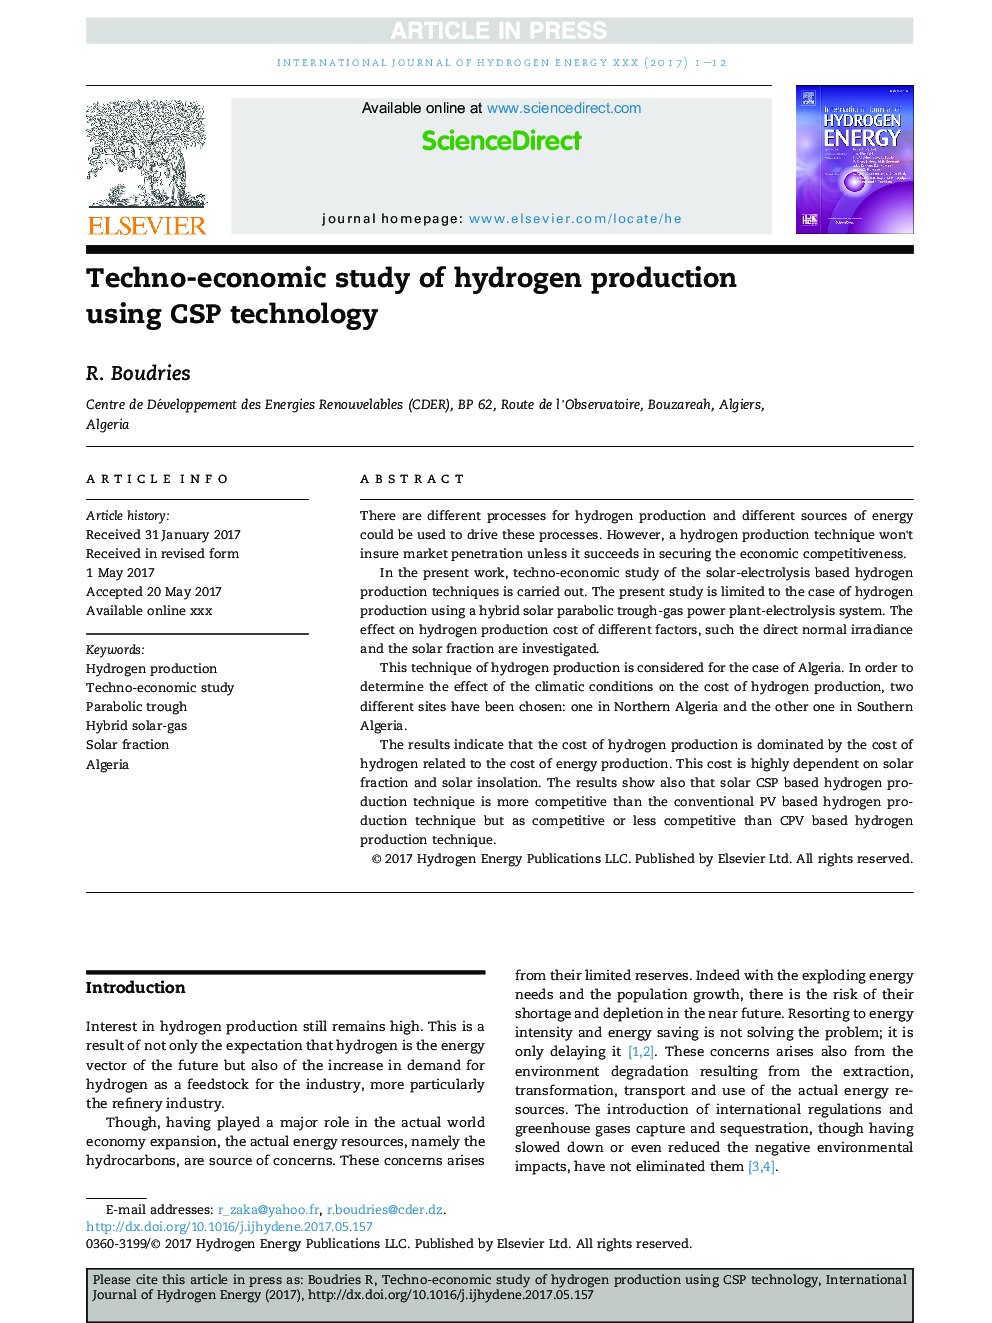 Techno-economic study of hydrogen production using CSP technology